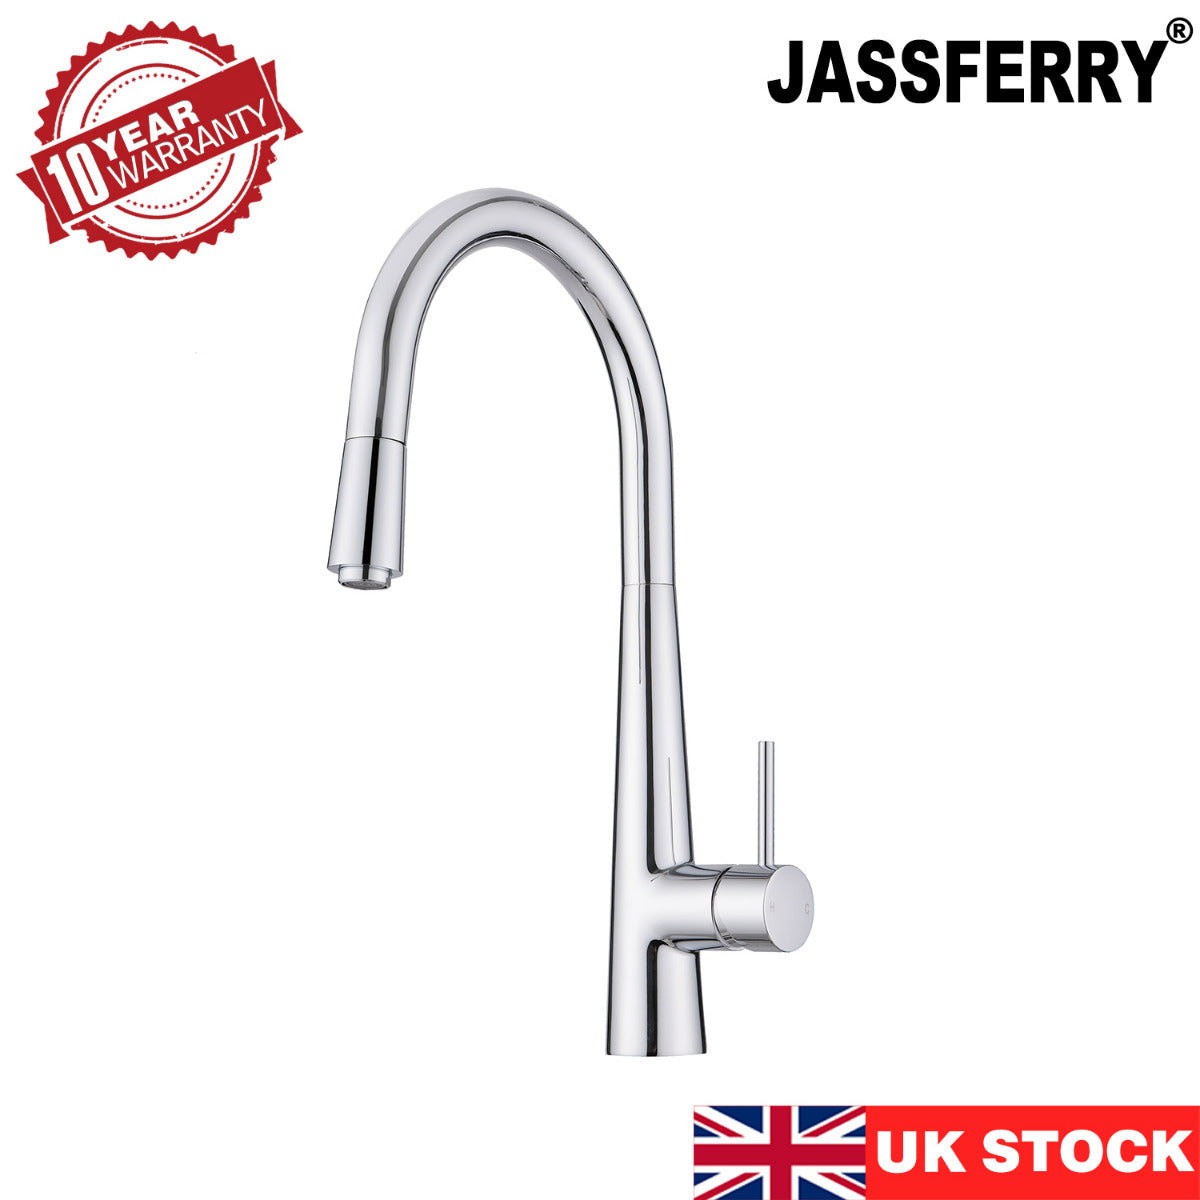 JassferryJASSFERRY Kitchen Sink Mixer Tap with 360 Degree Swivel Spout Single HandleKitchen taps